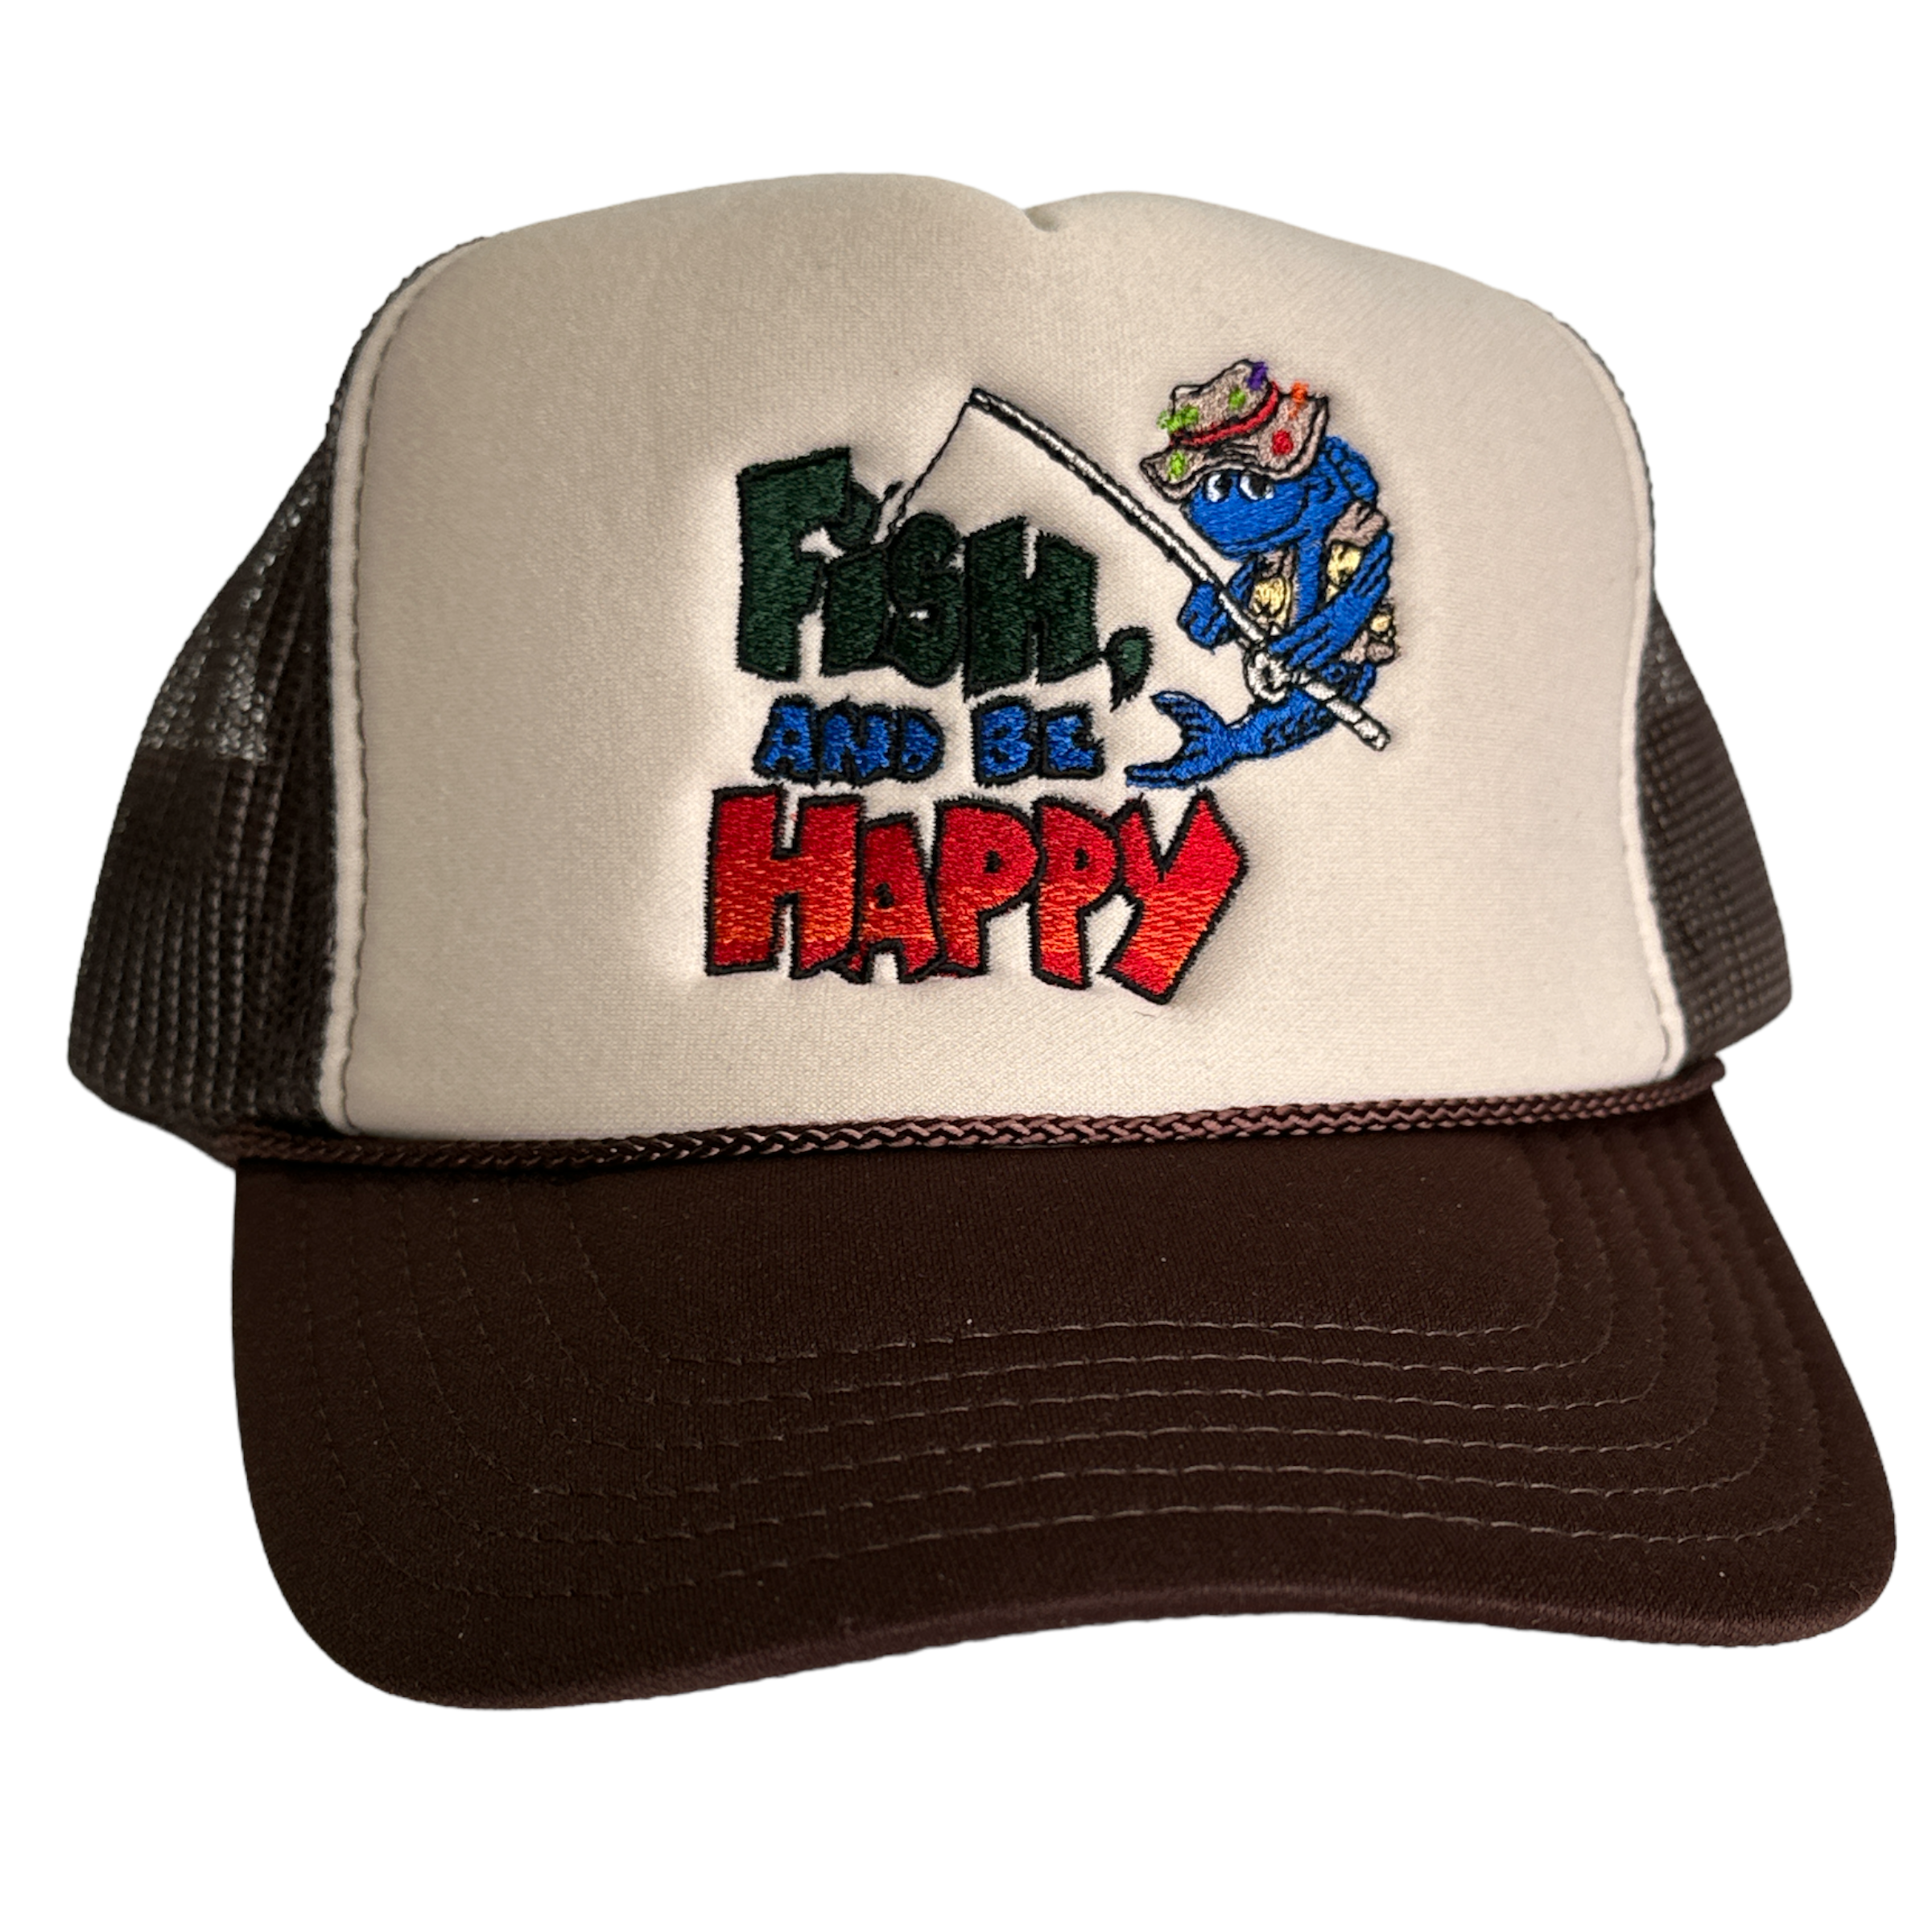 FISH AND BE HAPPY Brown Foam Mesh Trucker SnapBack Cap Hat Funny